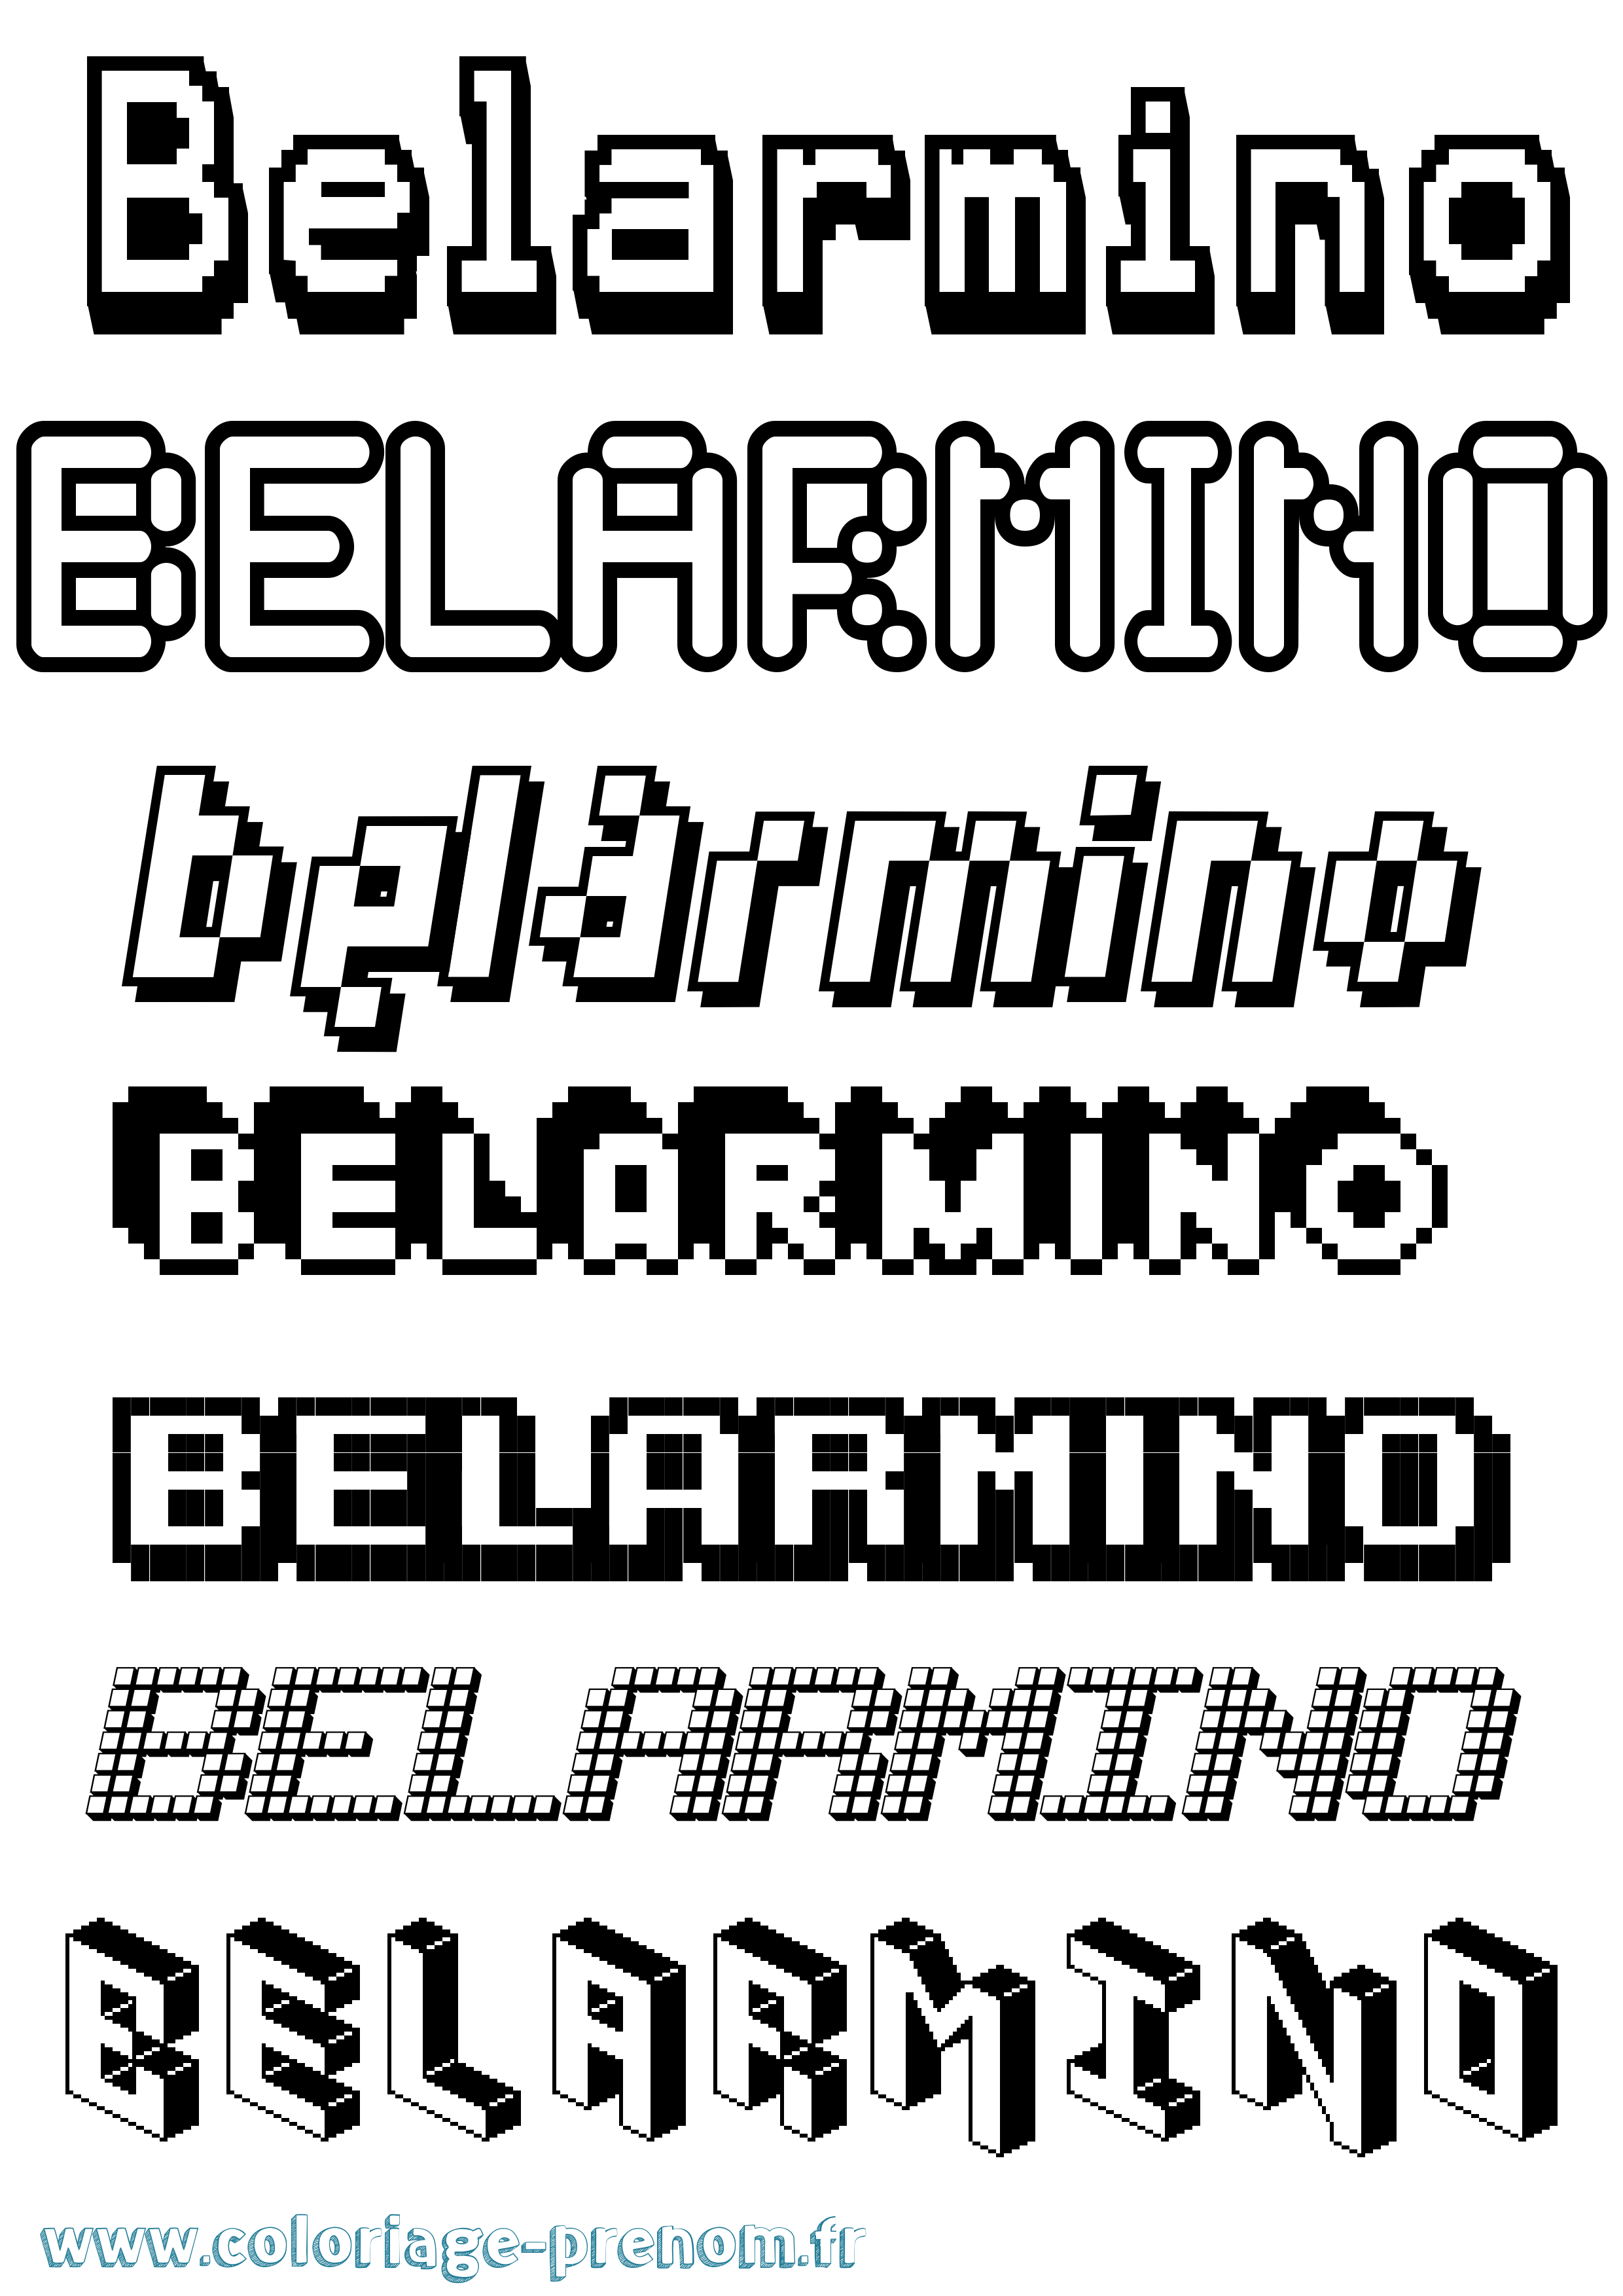 Coloriage prénom Belarmino Pixel